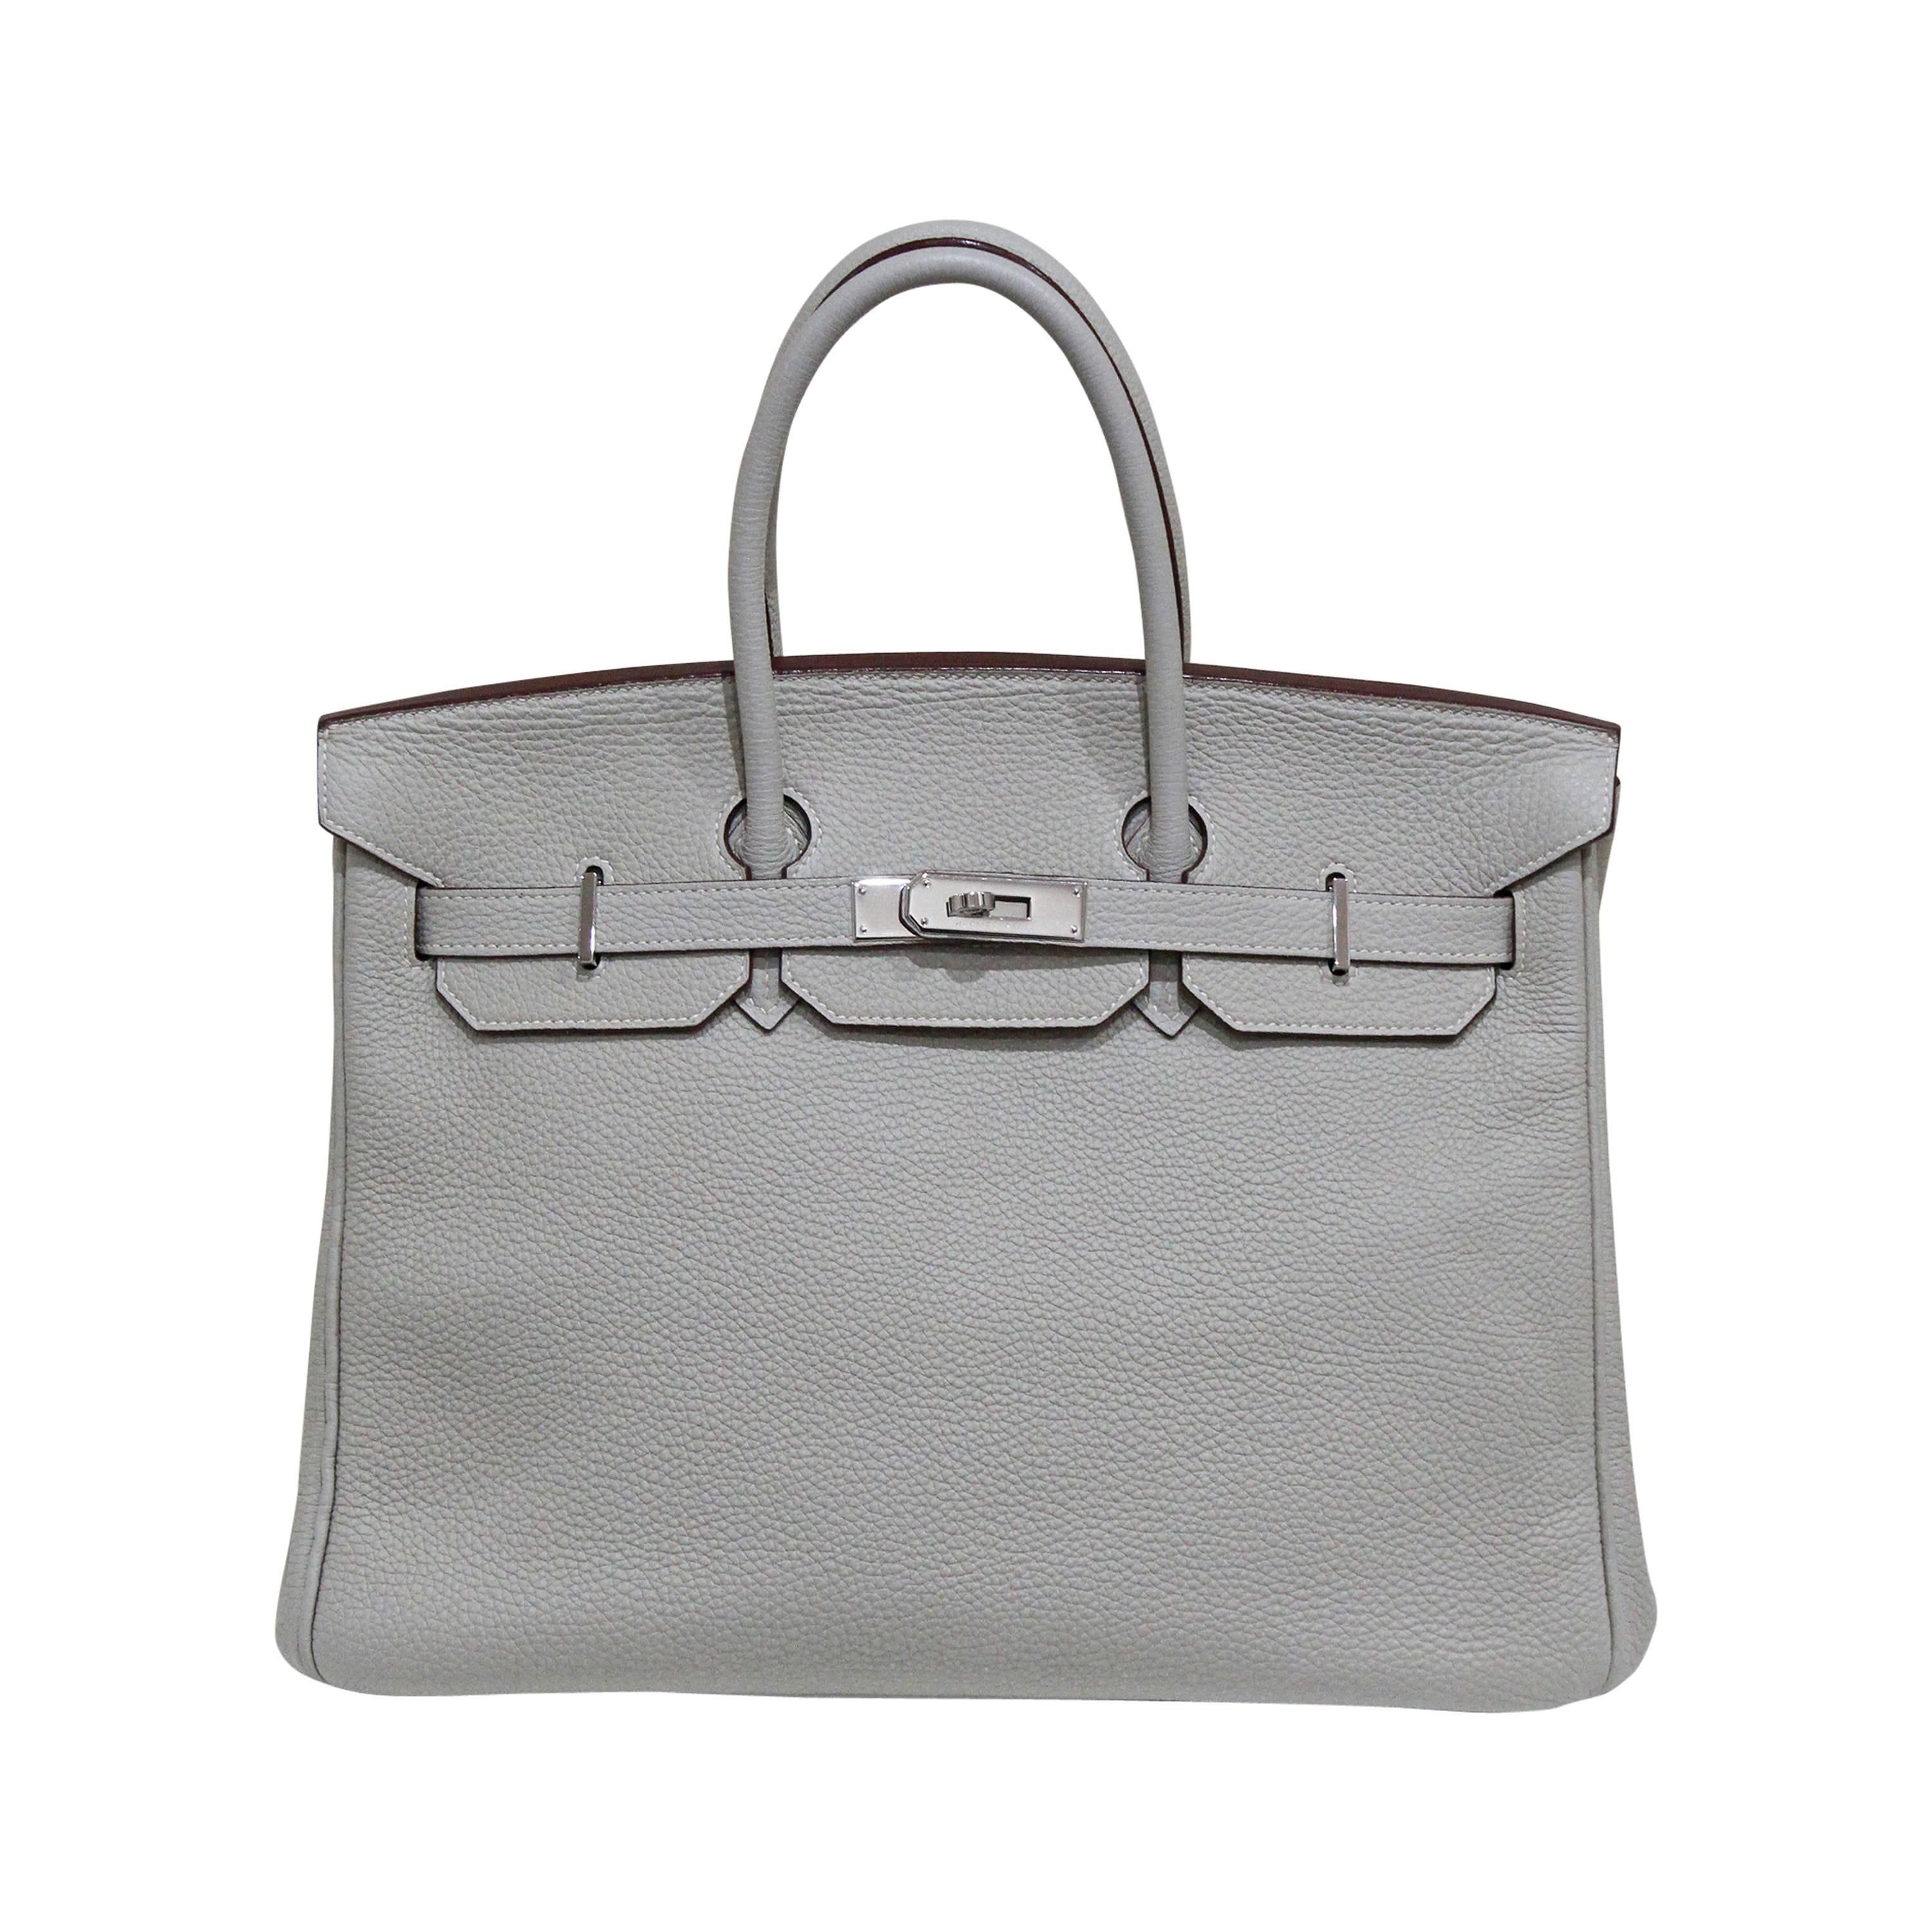 Hermes 35 cm Birkin Bag in Clemence Leather